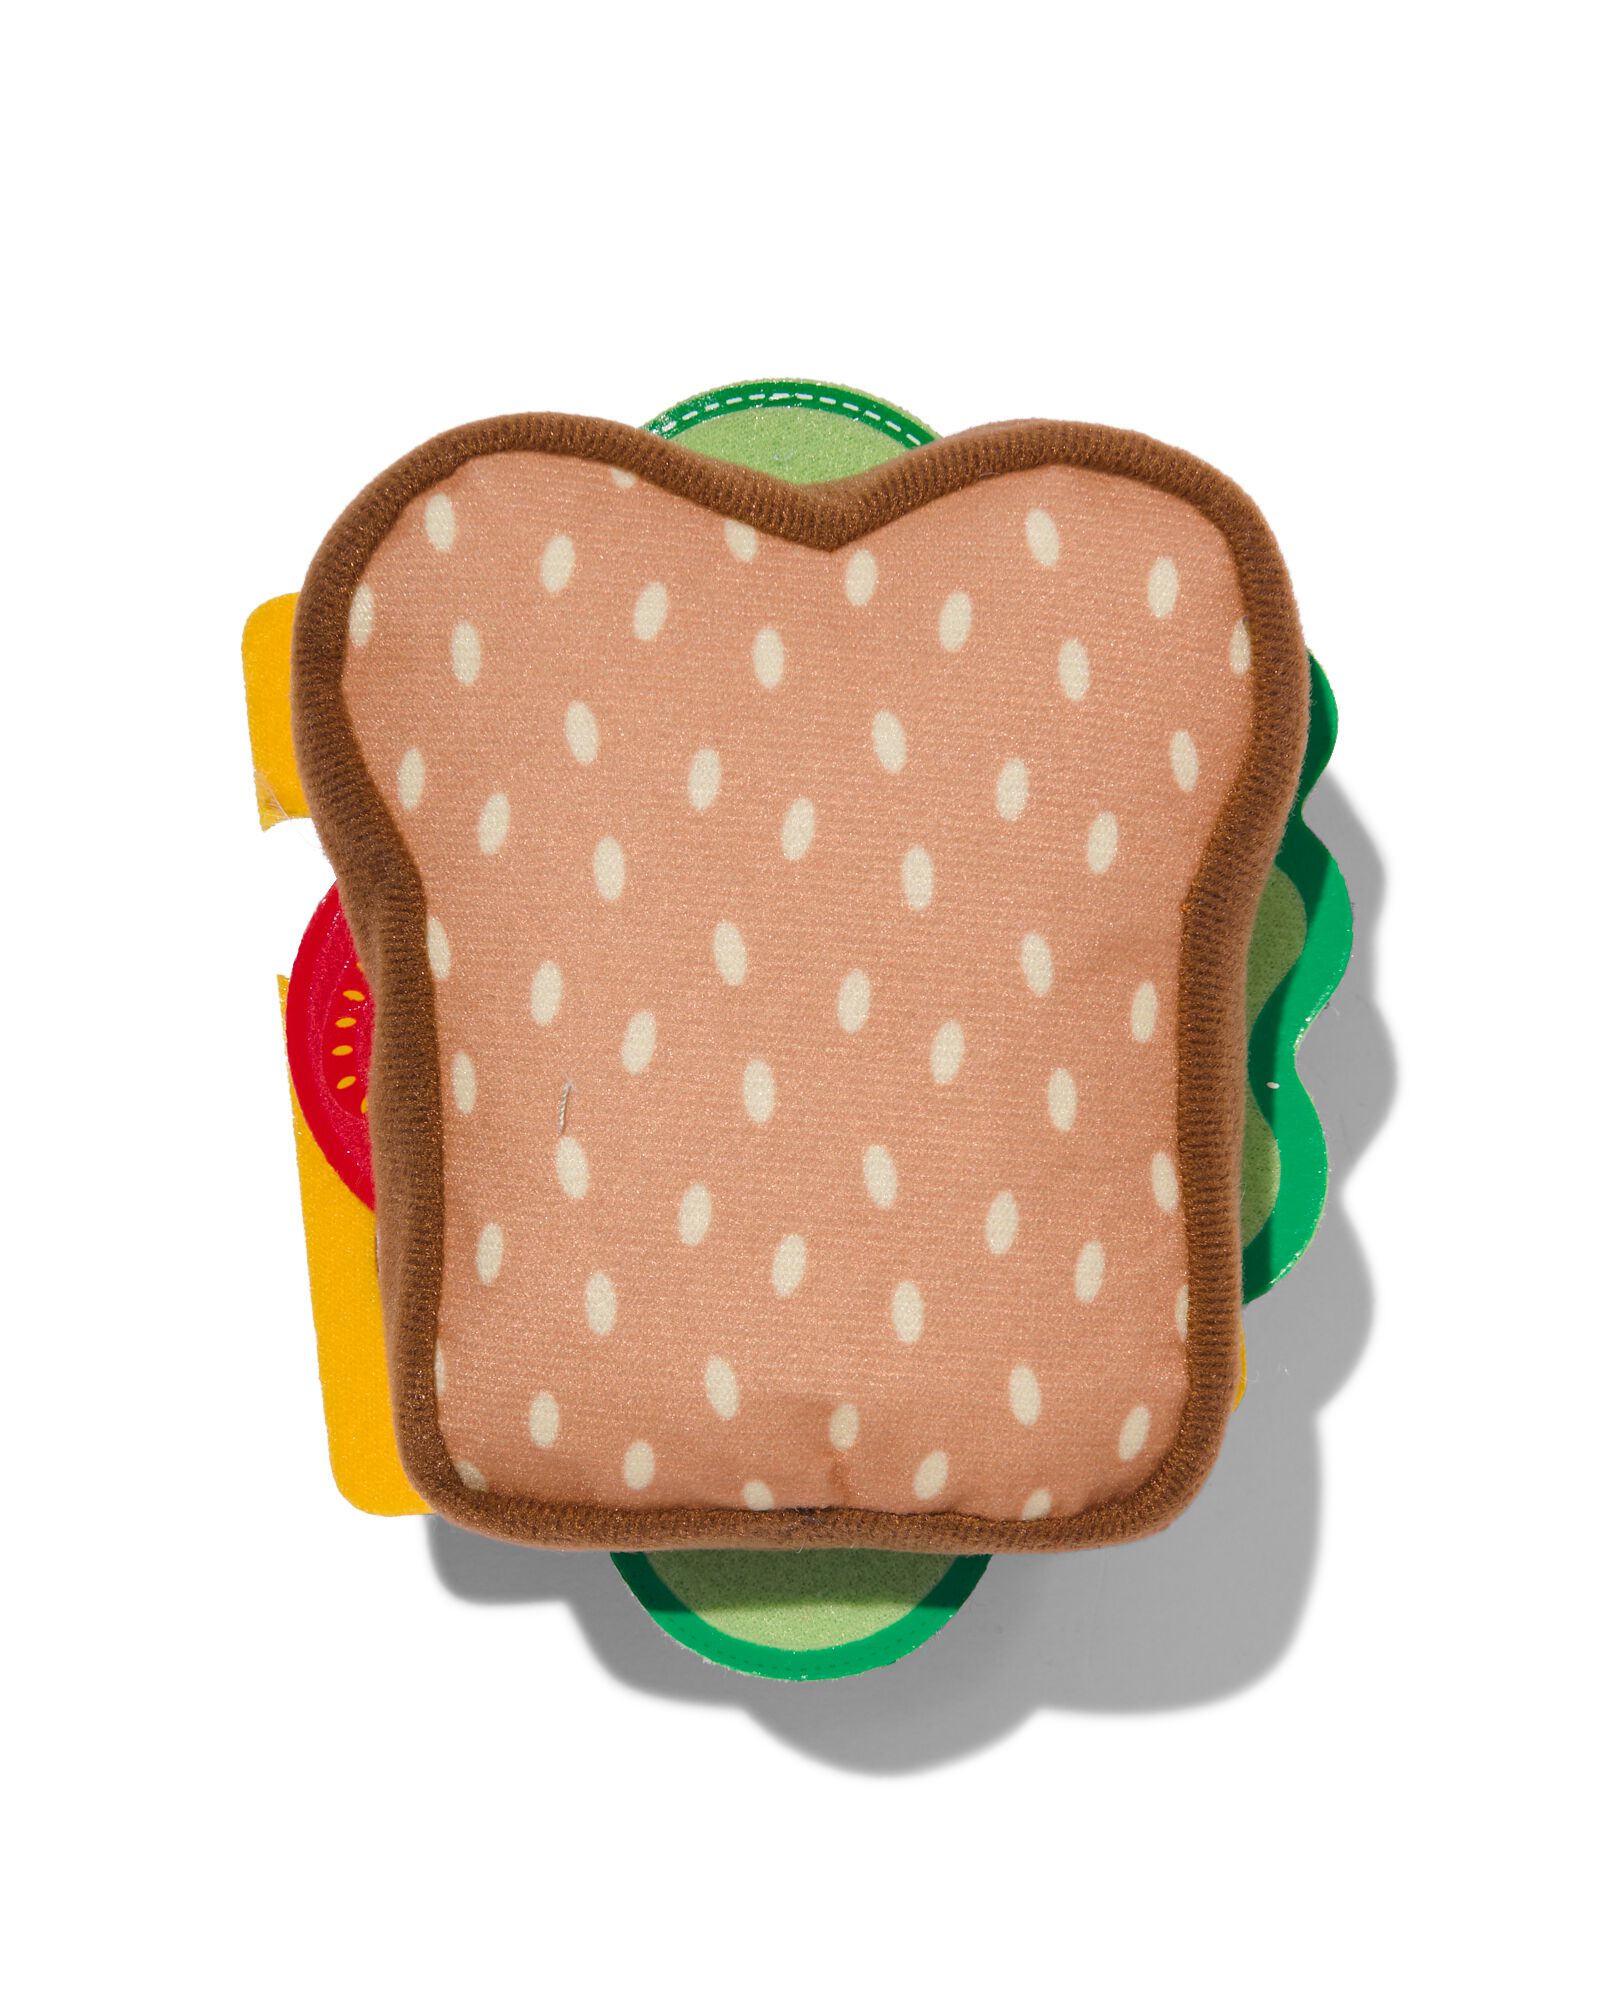 club sandwich feutrine 11 cm - 15190094 - HEMA